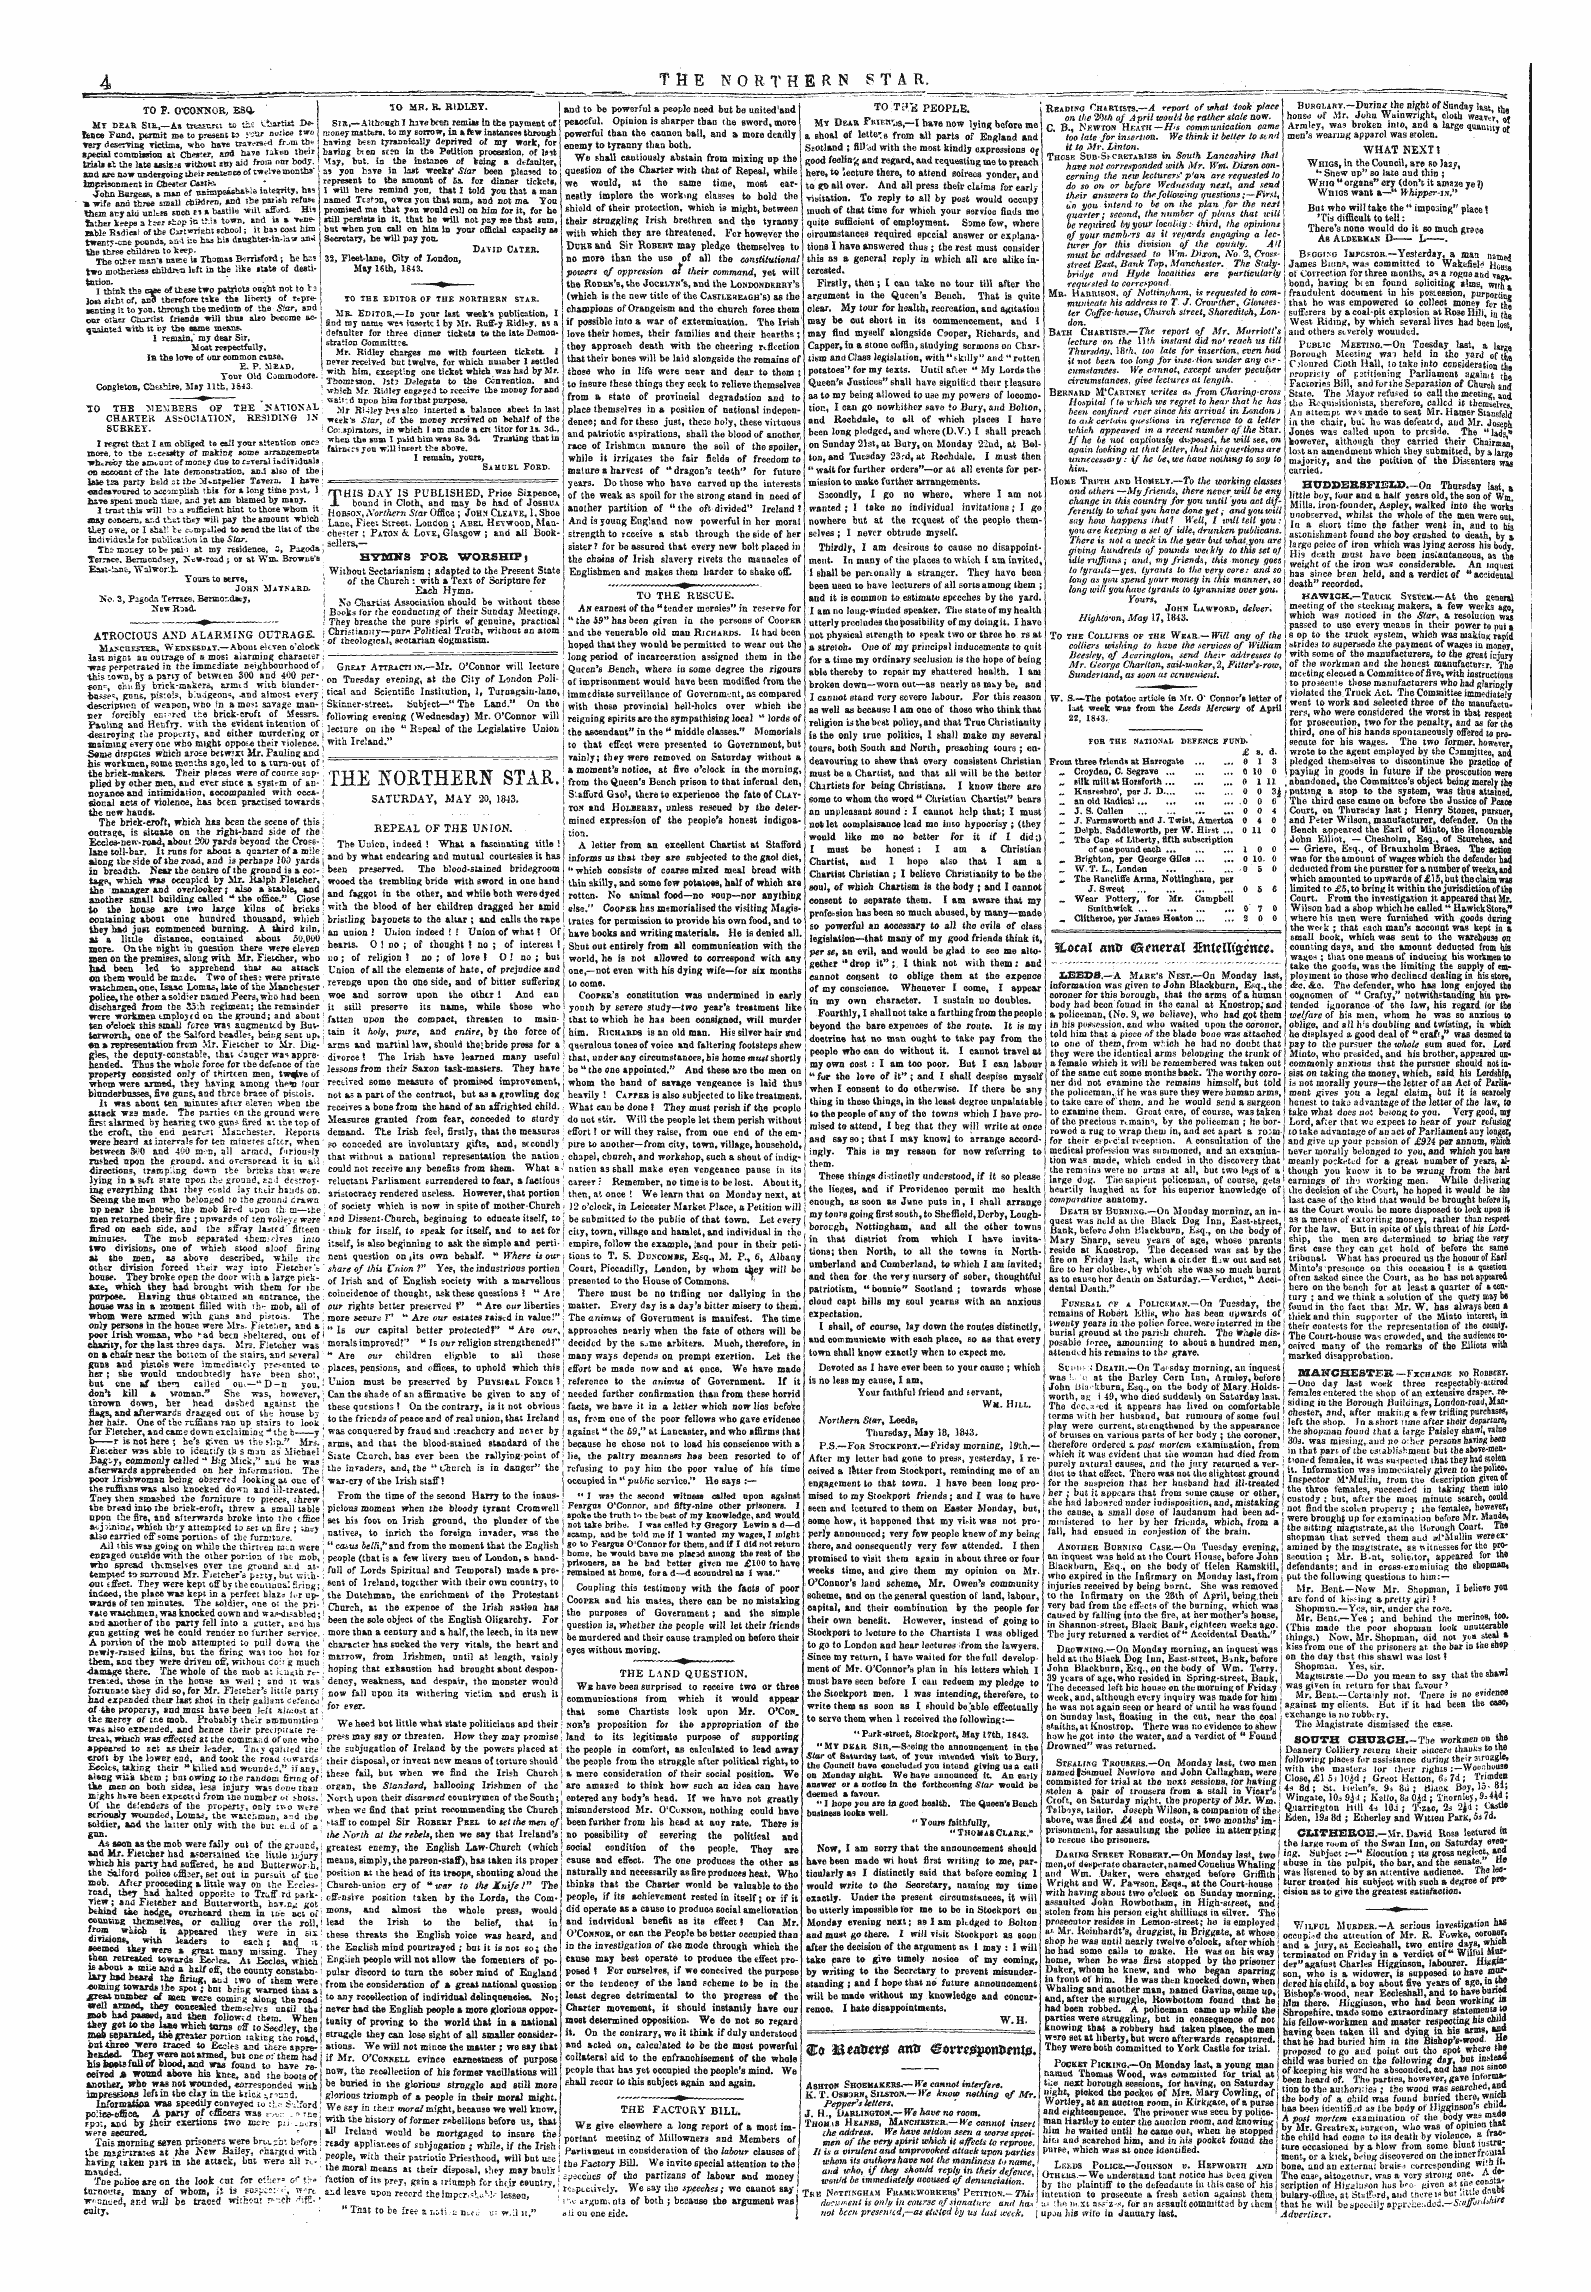 Northern Star (1837-1852): jS F Y, 1st edition - 3to Meatrerg Antr £Fom0$Otu&Gt;Ittt0